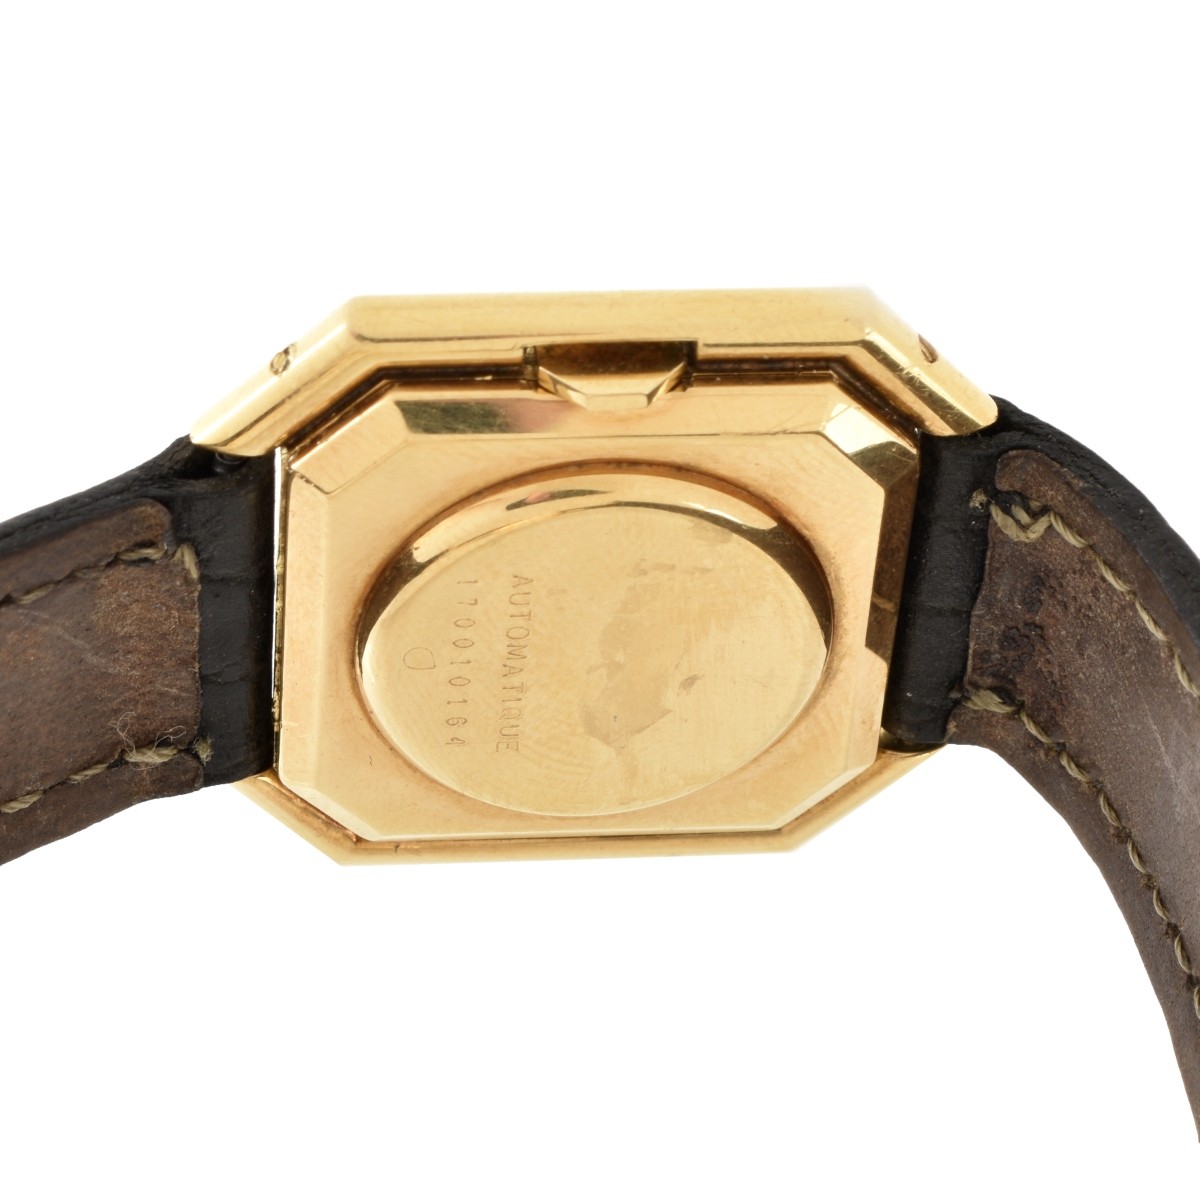 Cartier Ceinture 18K Watch